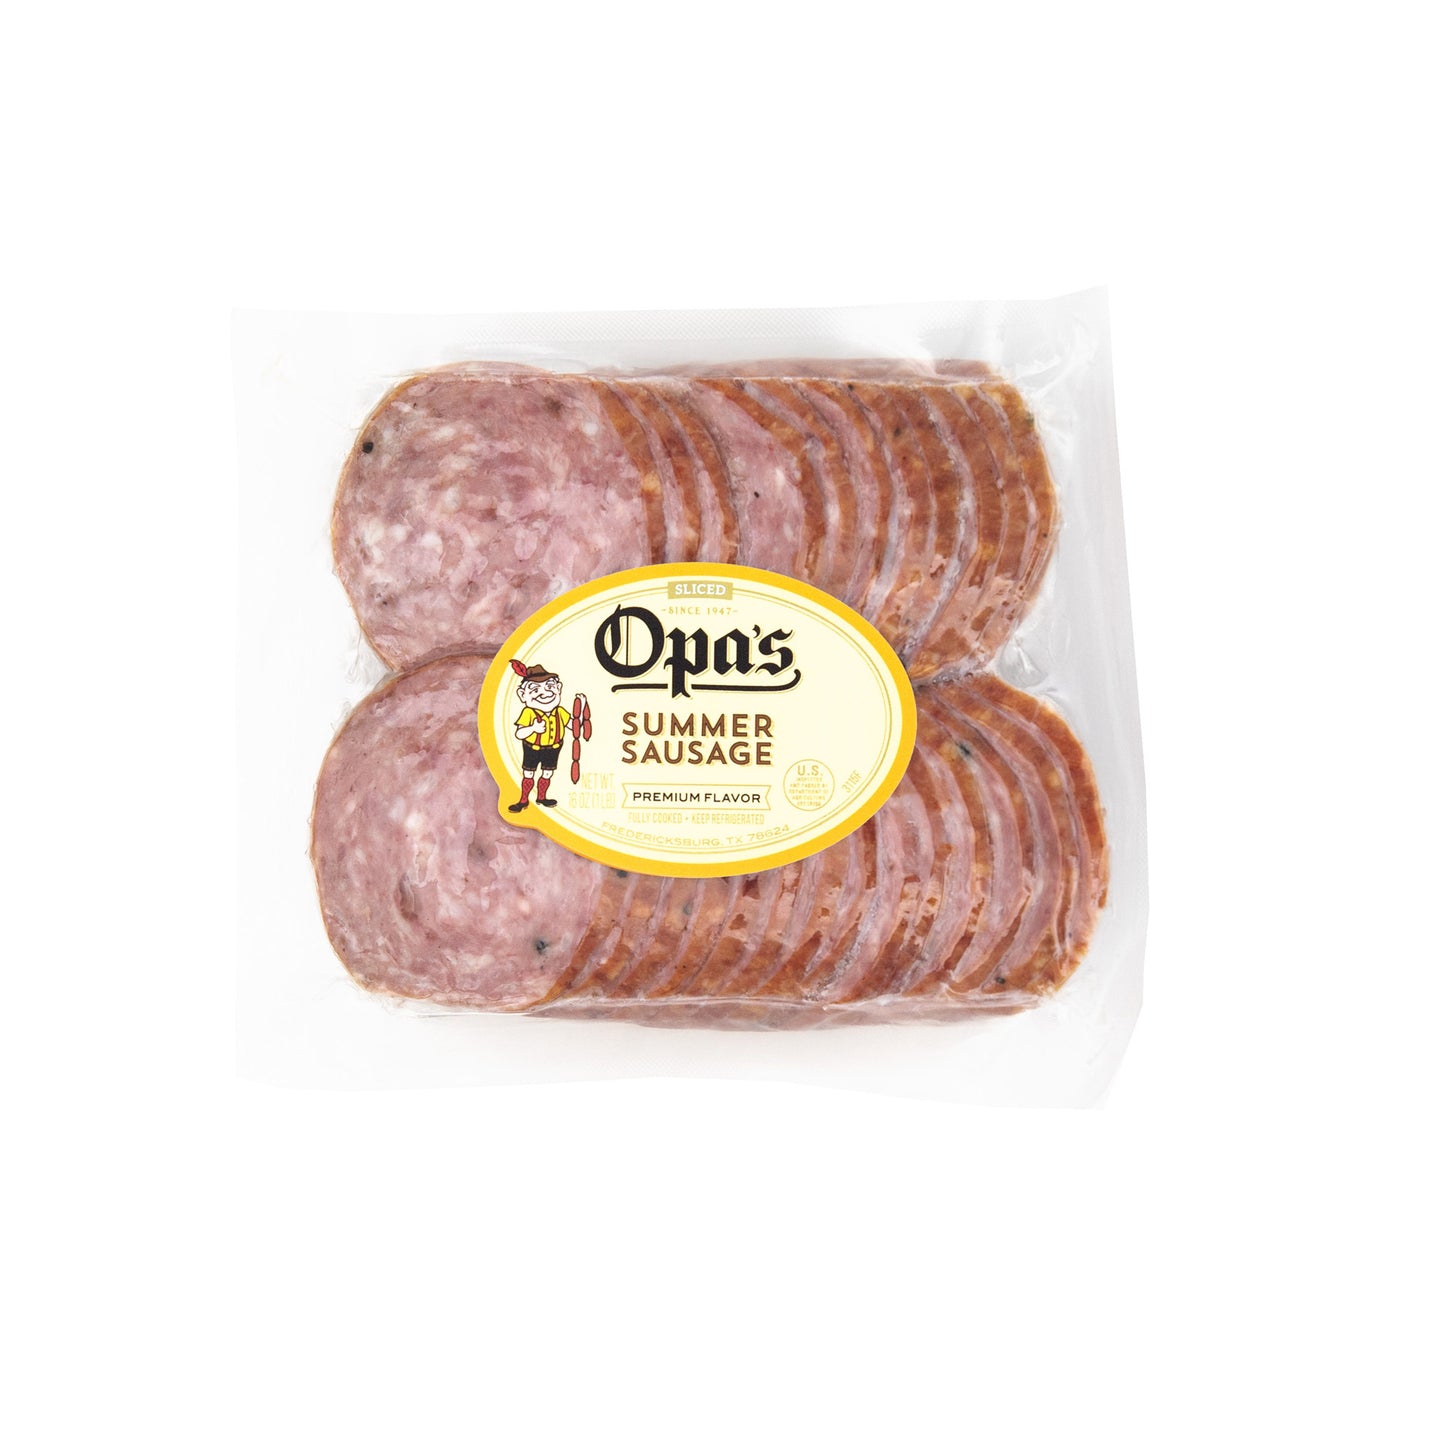 Opa's Summer Sausage